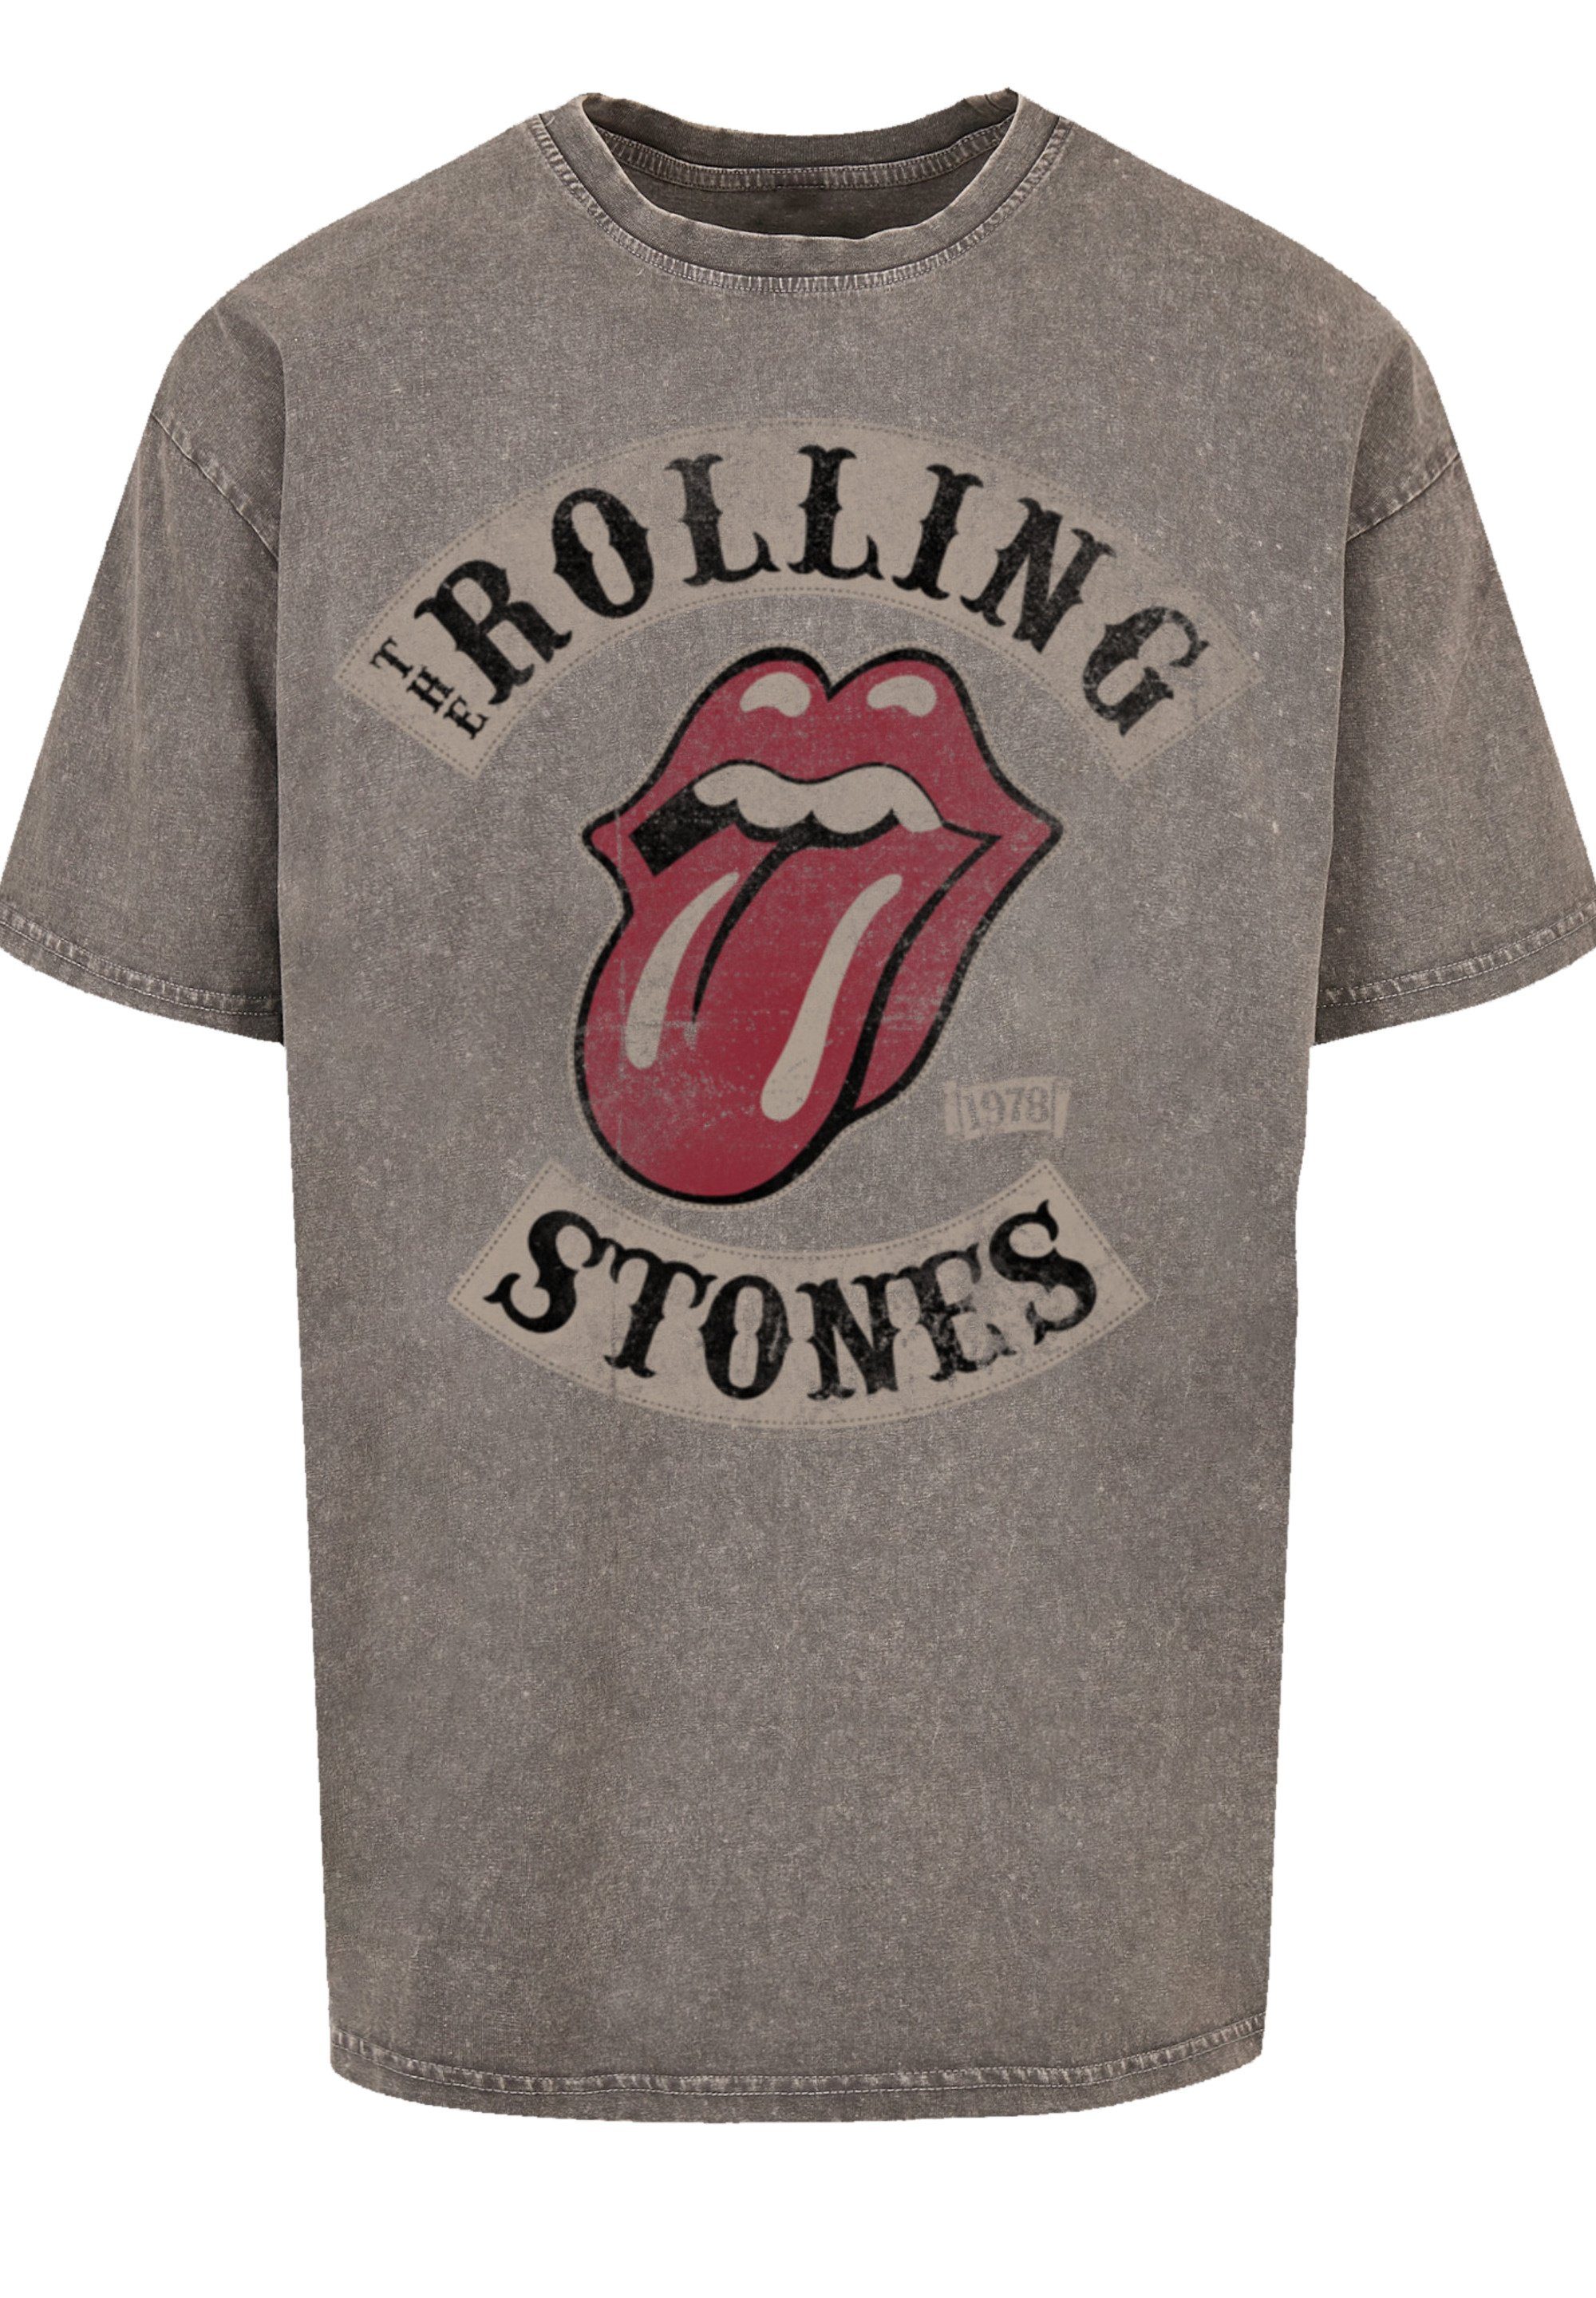 T-Shirt The Asphalt Print Tour Rolling F4NT4STIC '78 Stones